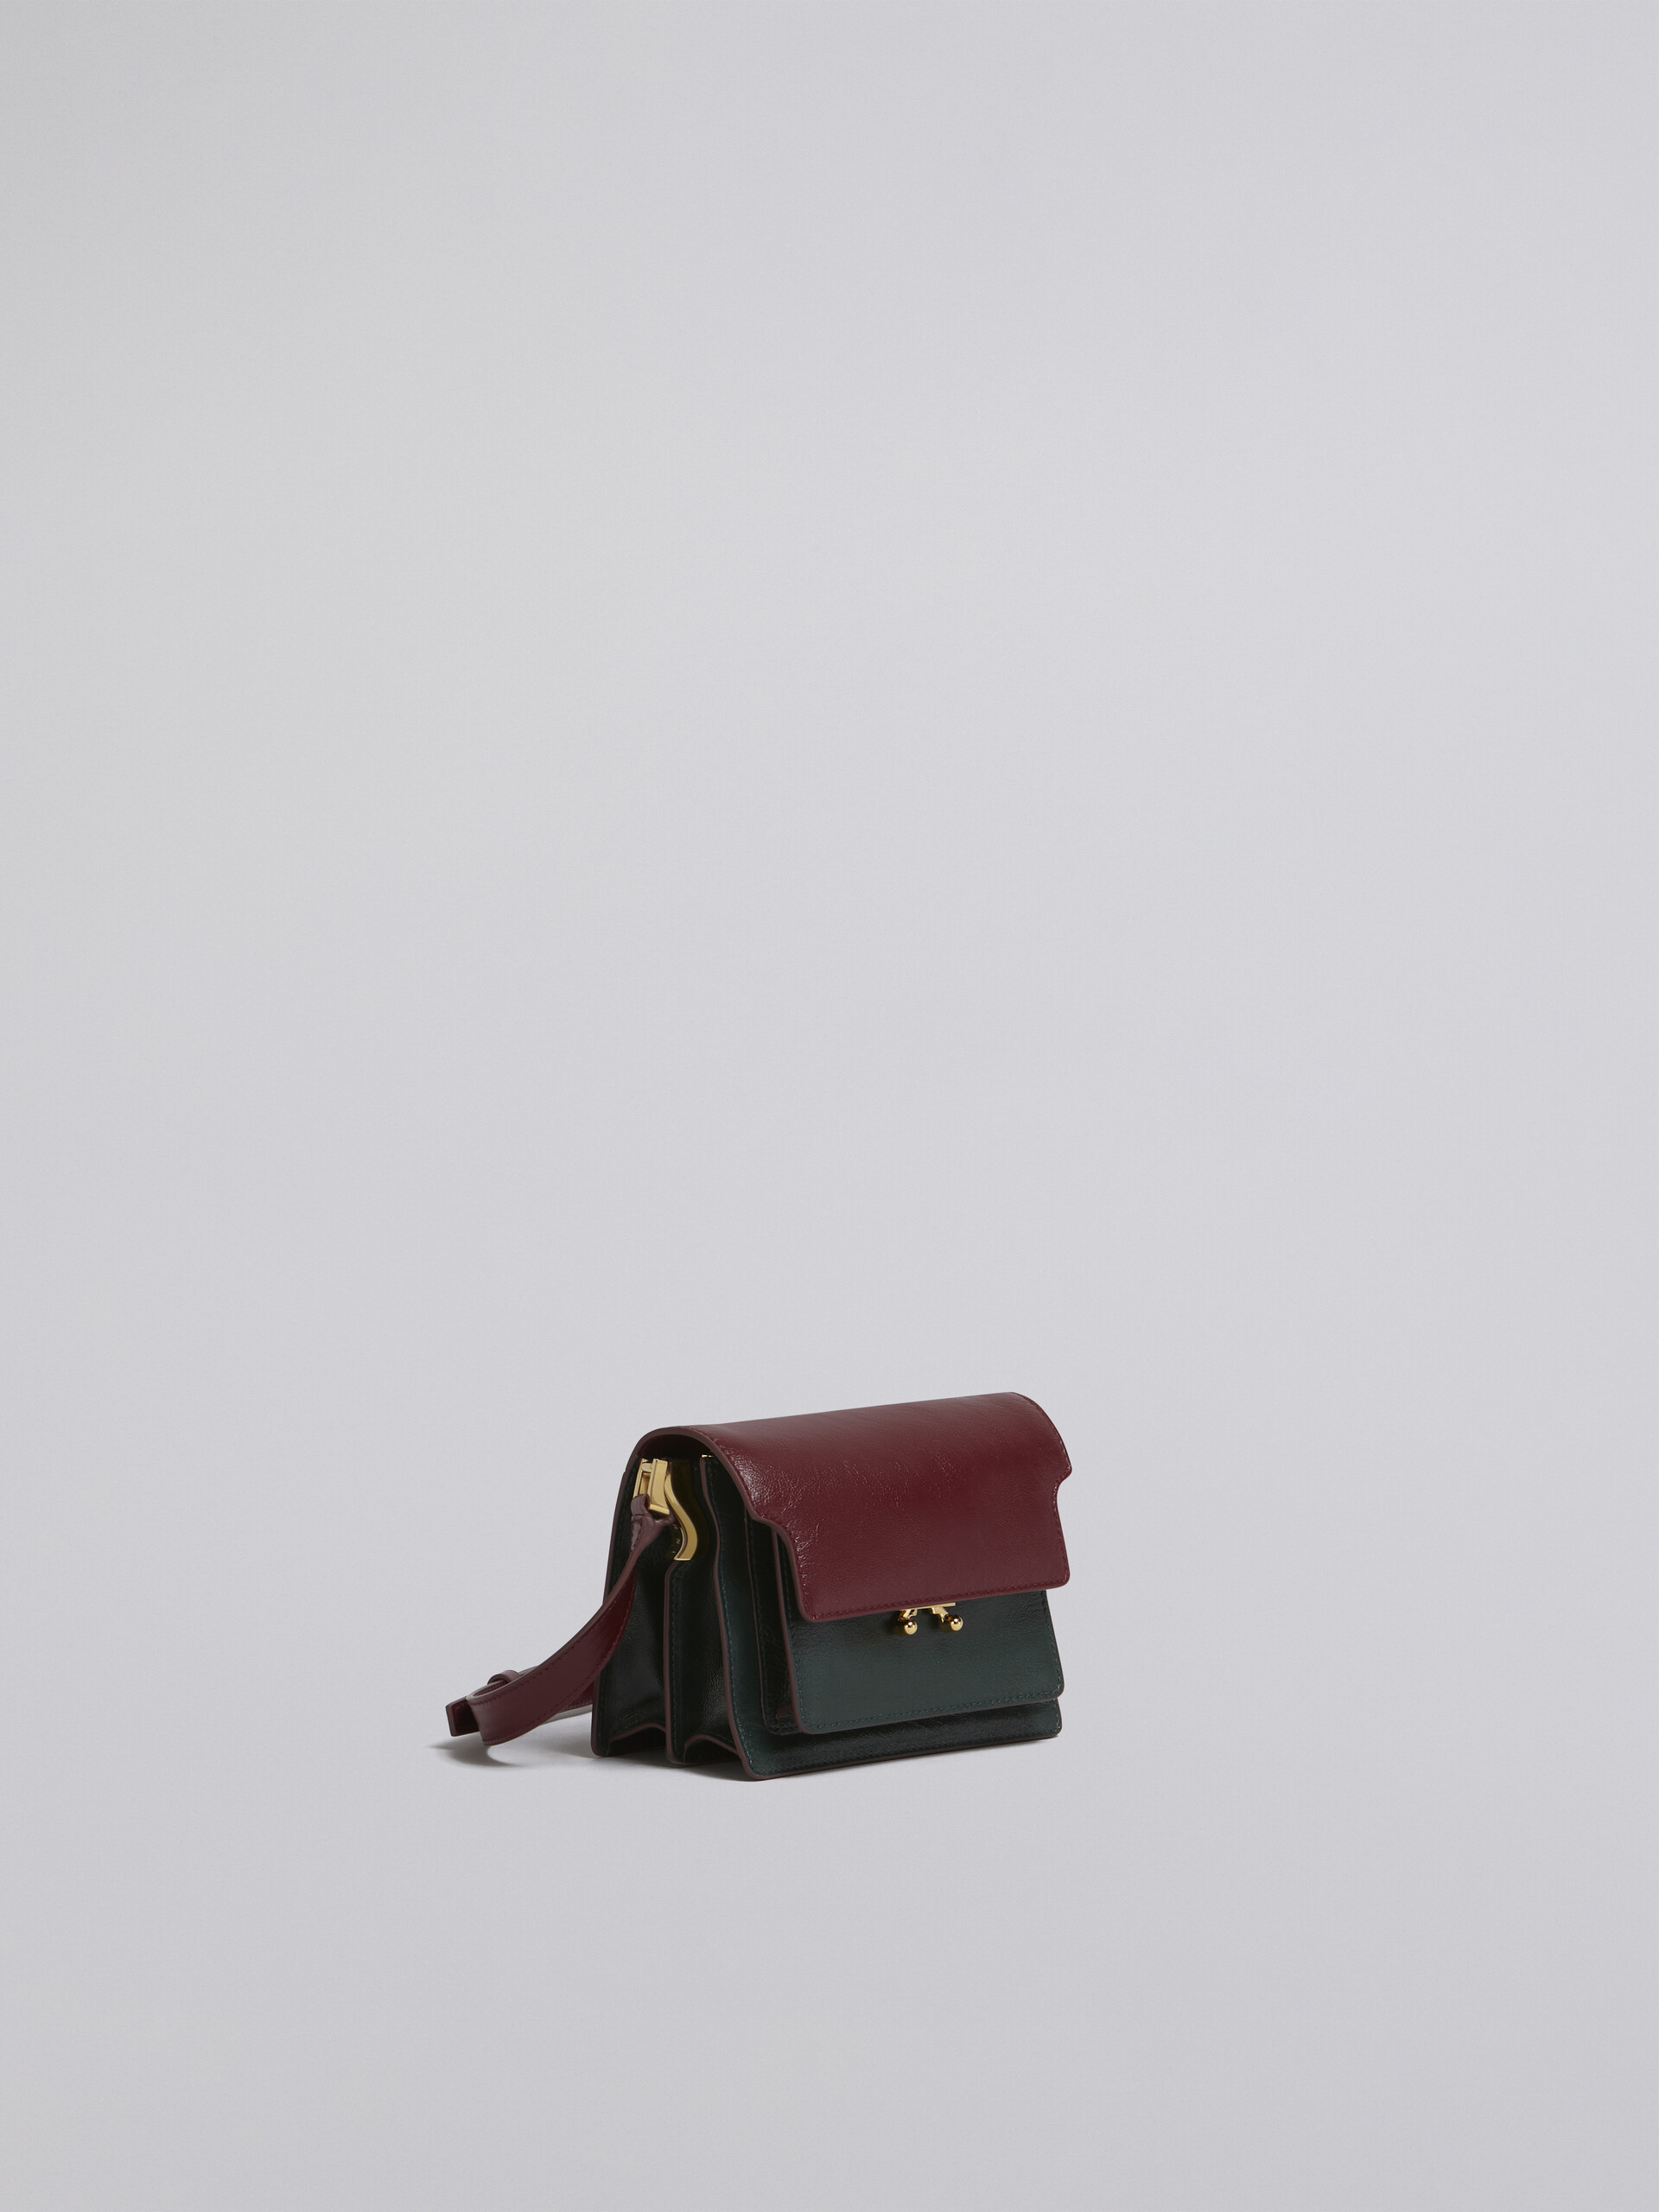 TRUNK SOFT bag in green and burgundy tumbled calf - Shoulder Bag - Image 5